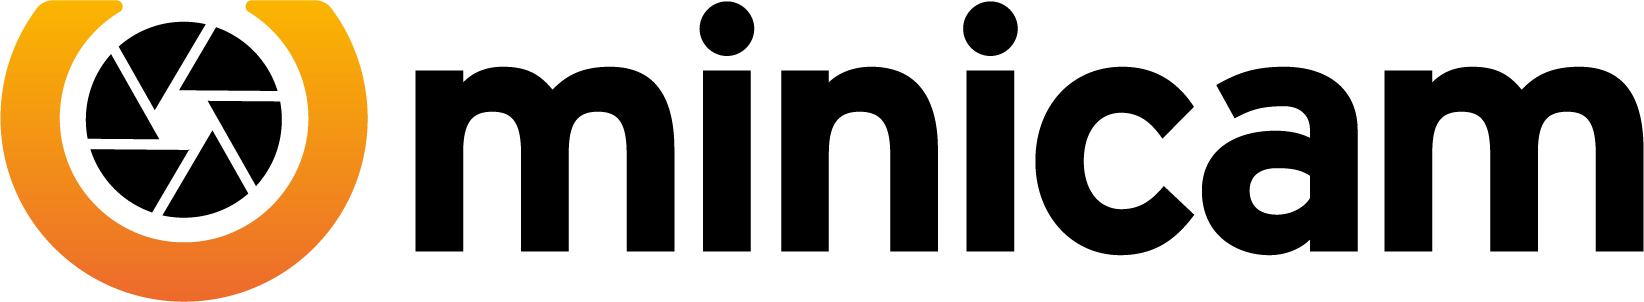 minicam-logo-CMYK-black (002)